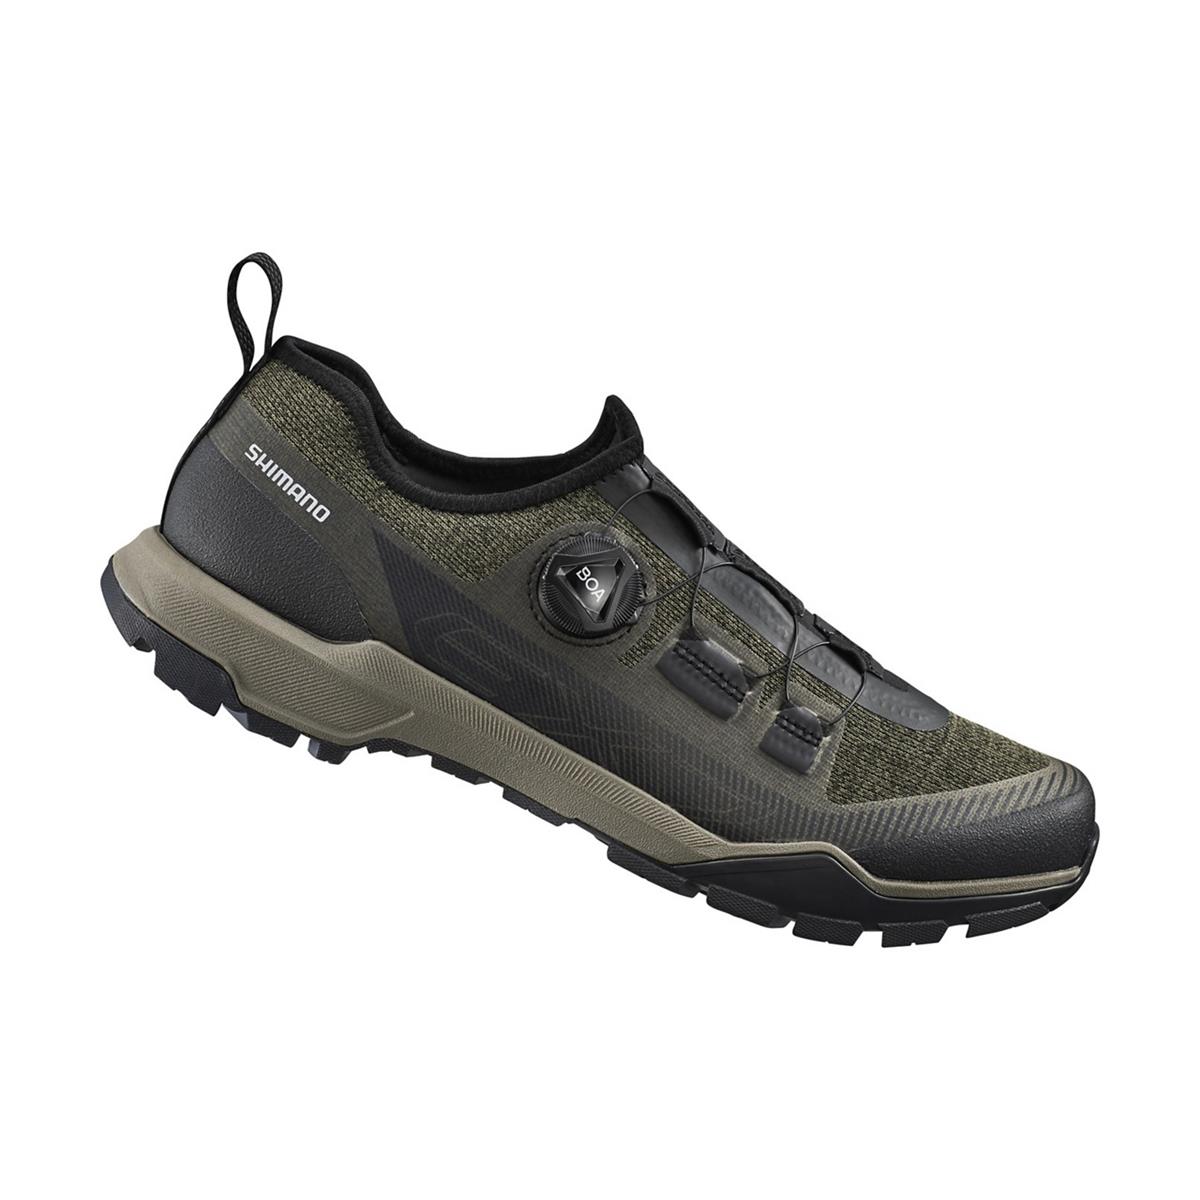 Trekking / MTB Shoes SH-EX700 Green Size 43